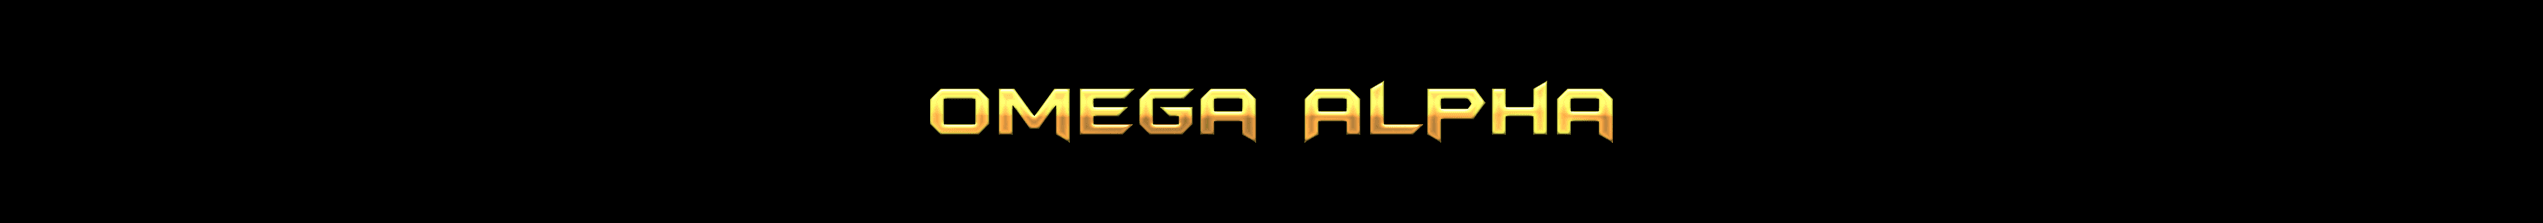 Omega-Alpha-Project-Wallet 橫幅